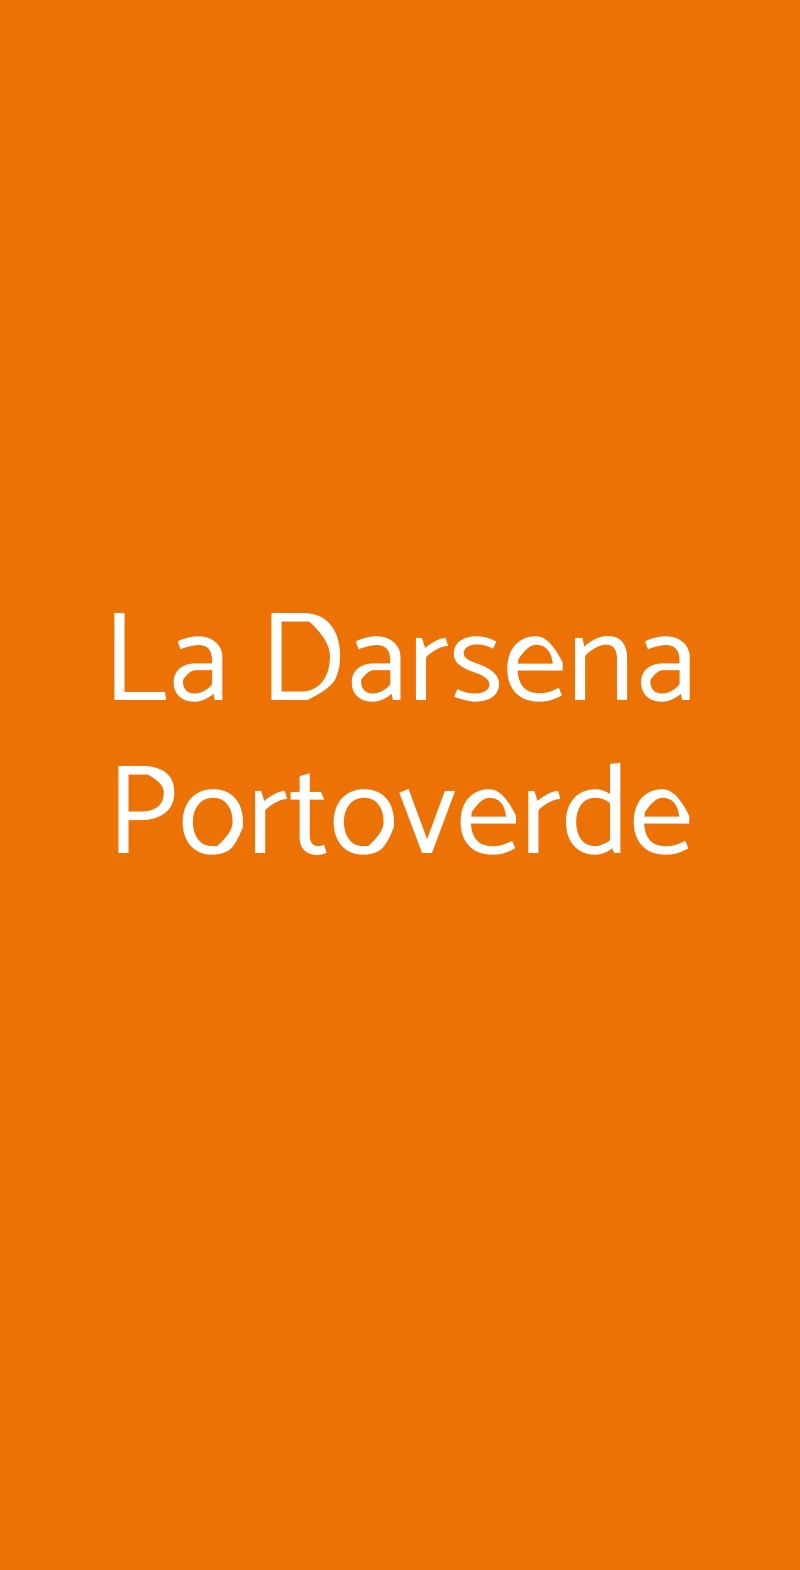 La Darsena Portoverde Misano Adriatico menù 1 pagina